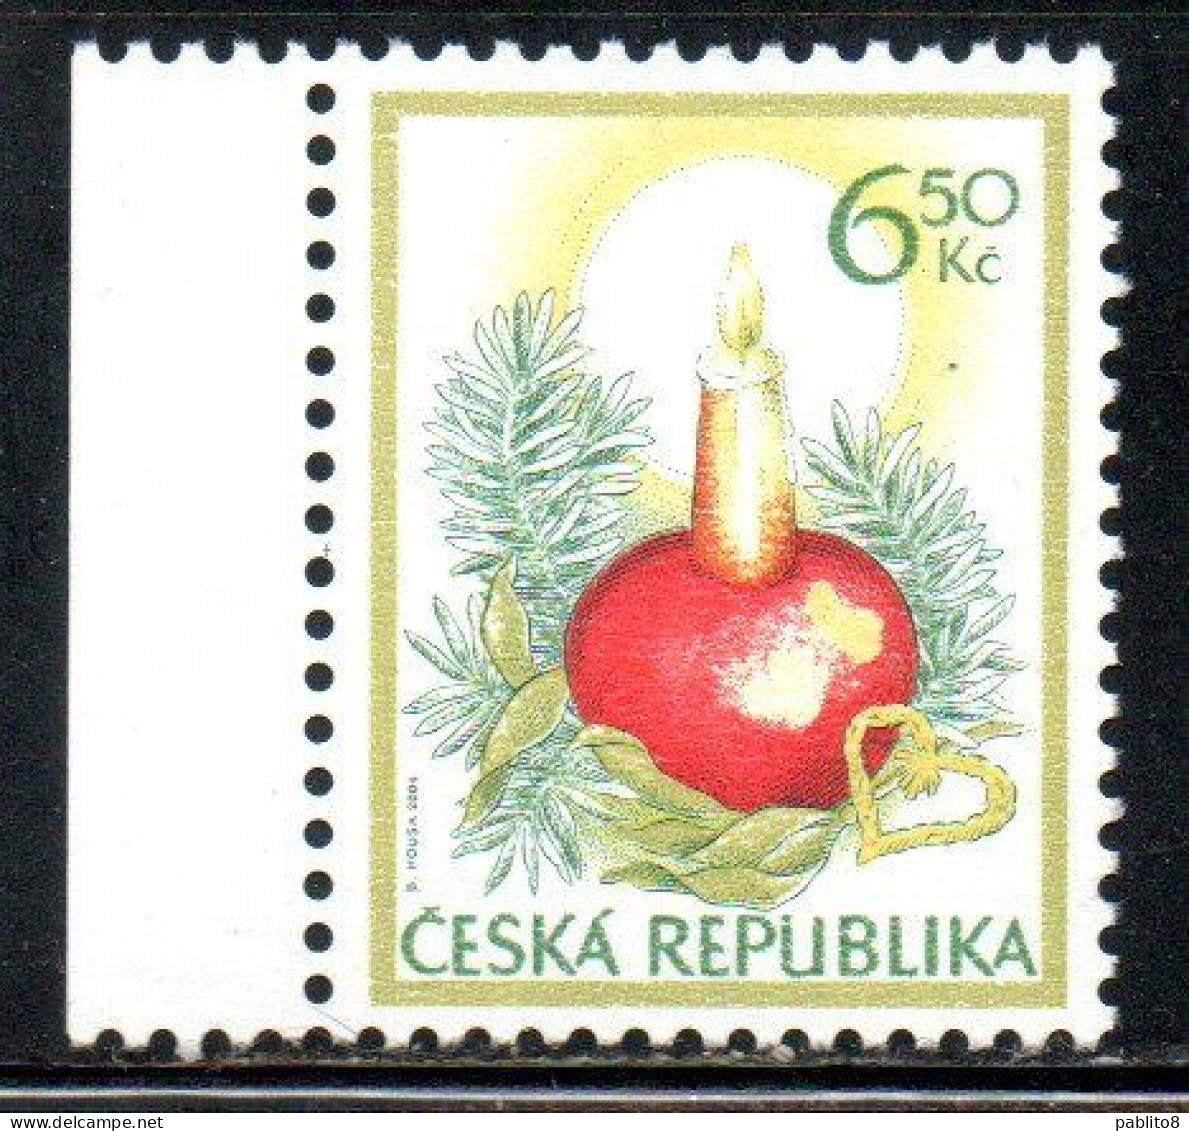 CZECH REPUBLIC CECA REPUBBLICA CZECHOSLOVAKIA 2004 CHRISTMAS NATALE NOEL WEIHNACHTEN NAVIDAD 6.50k MNH - Nuovi